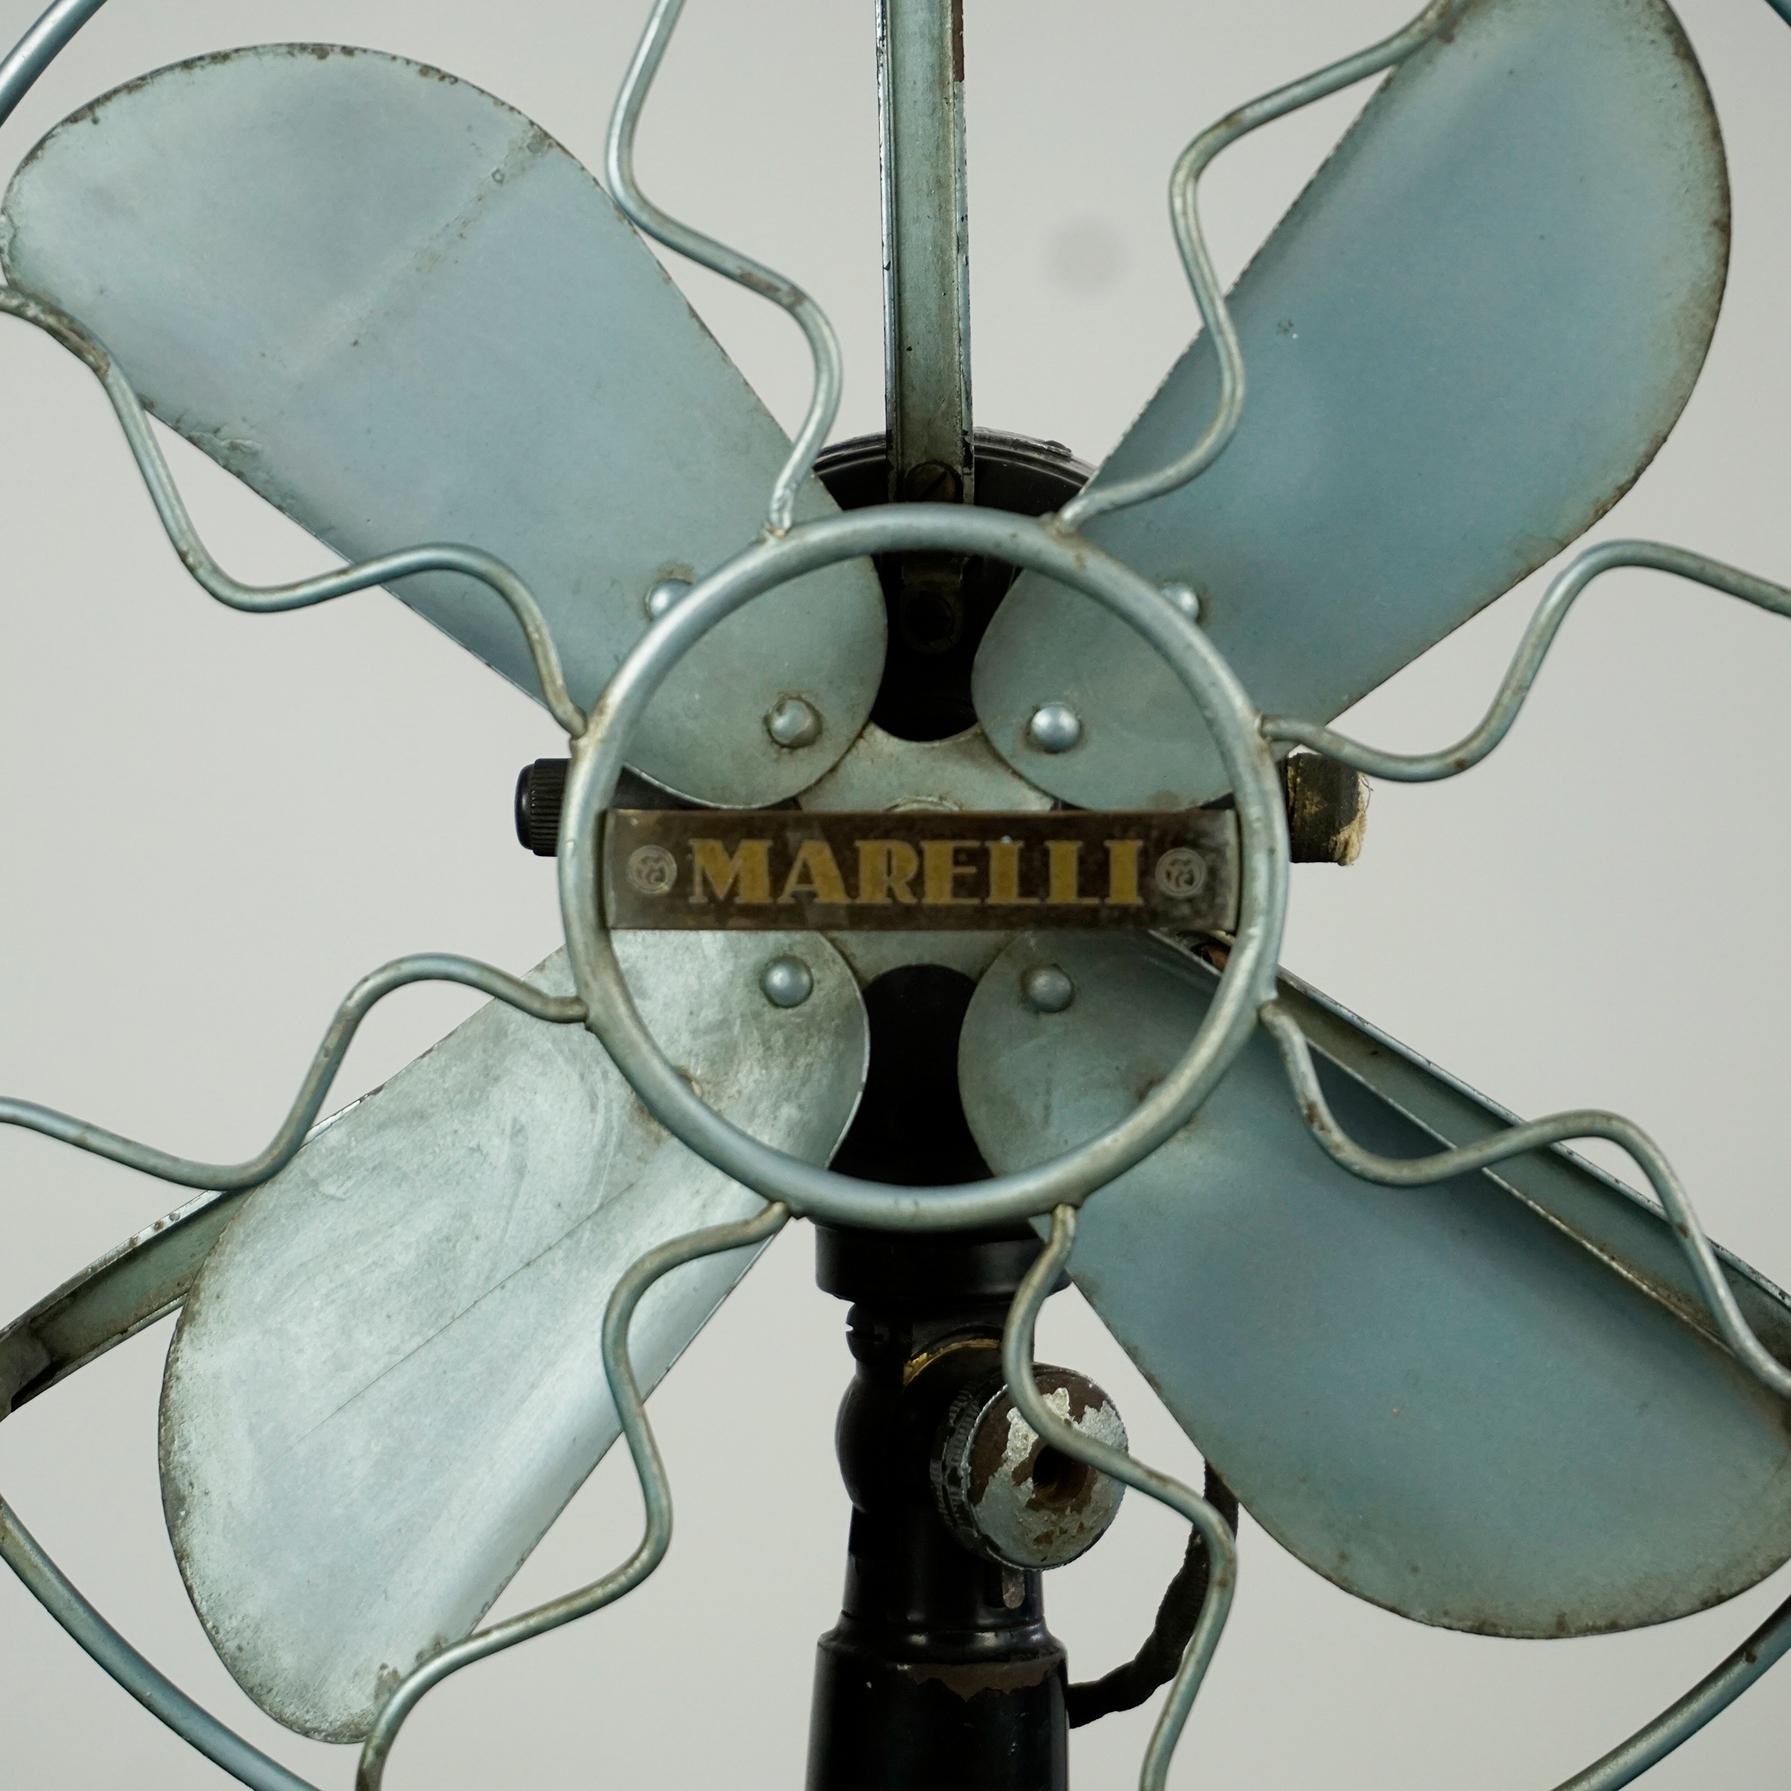 Mid-20th Century 0riginal Vintage Industrial Art Deco Table Fan by Marelli Italy